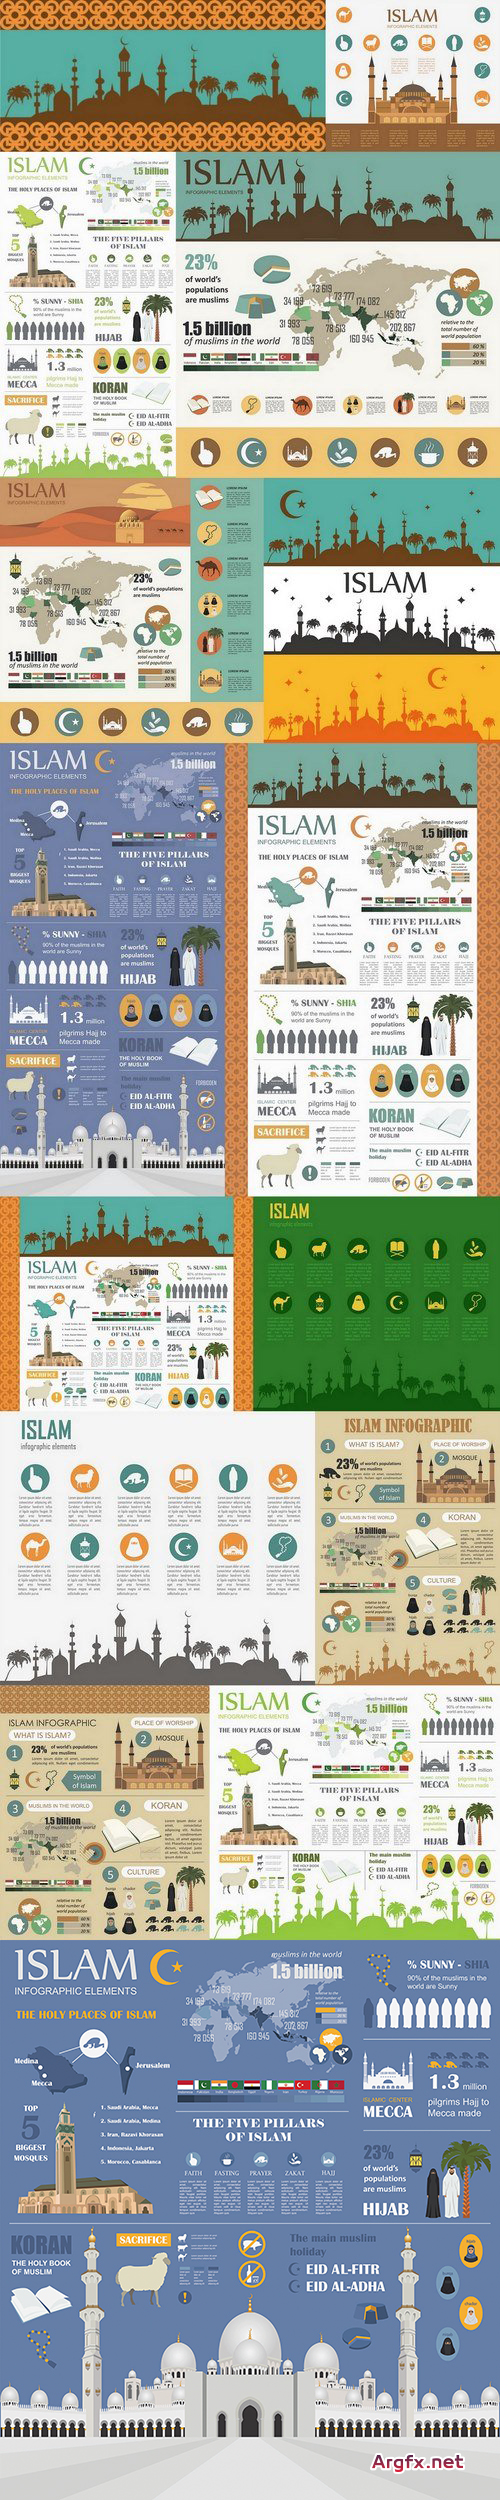  Islam infographic. Muslim culture 2